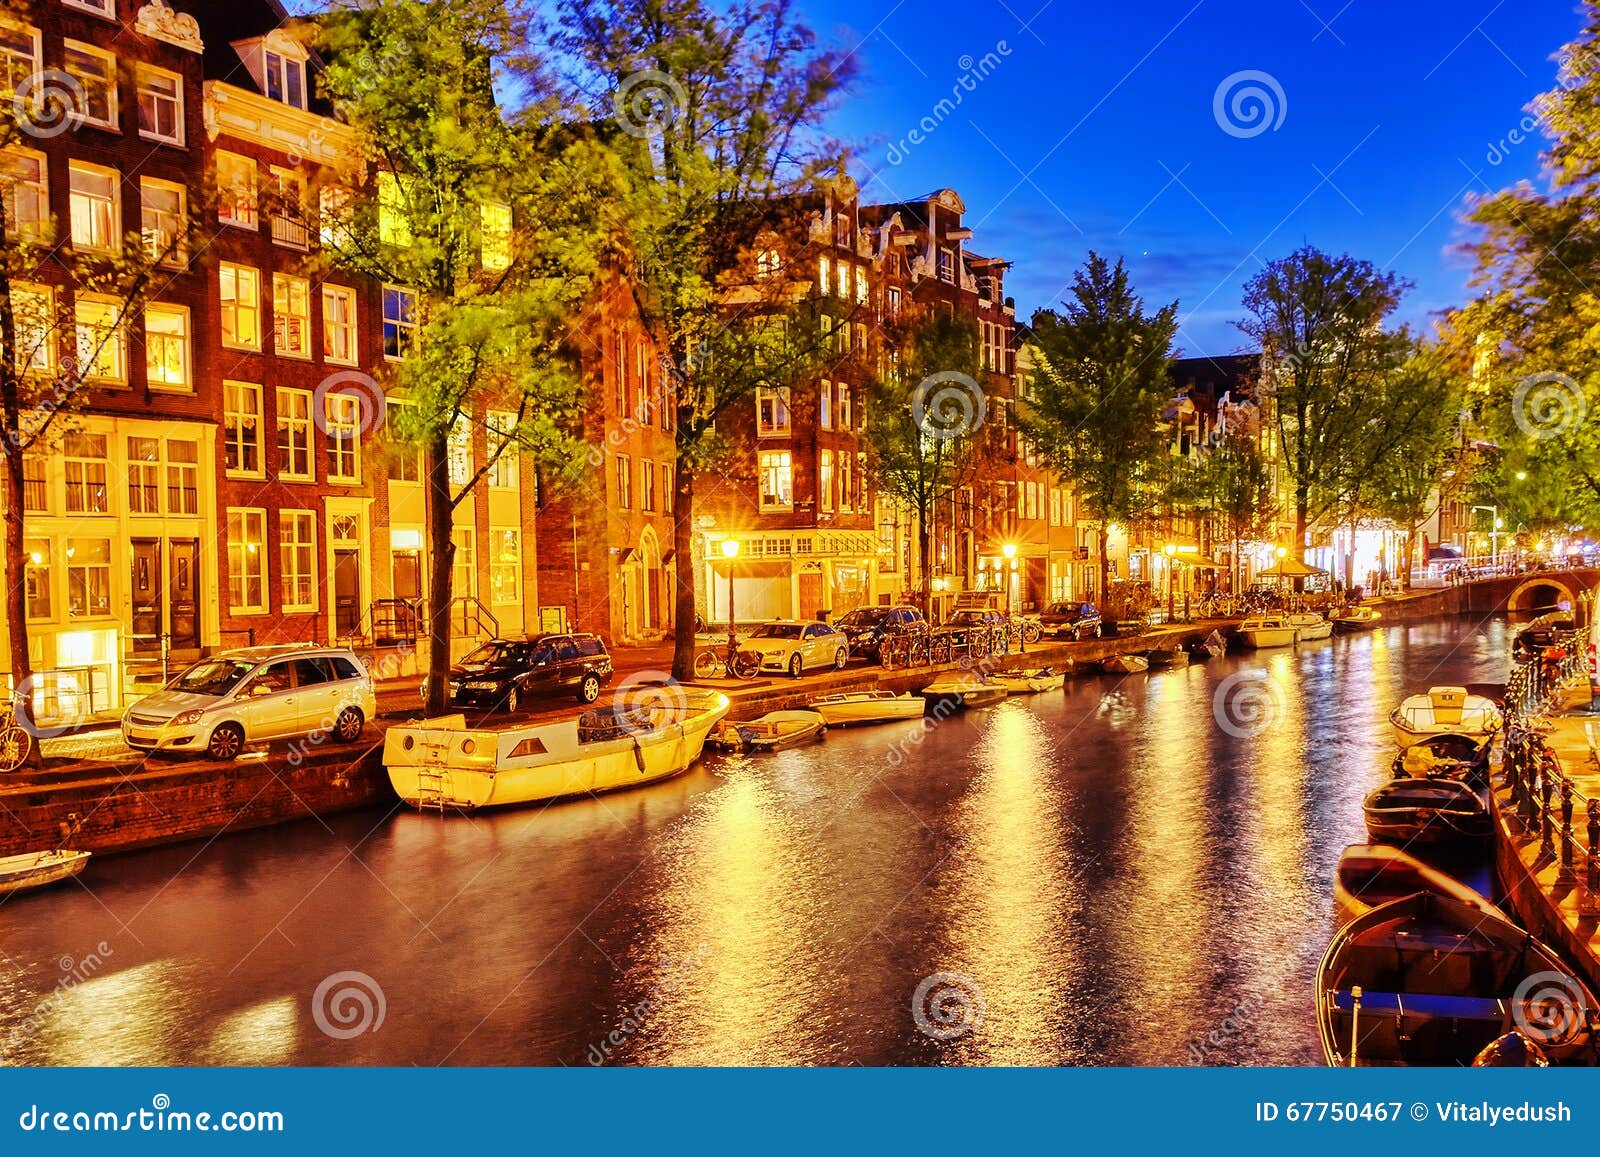 174 Beautiful Amsterdam City Evening Time Stock Photos - Free ...